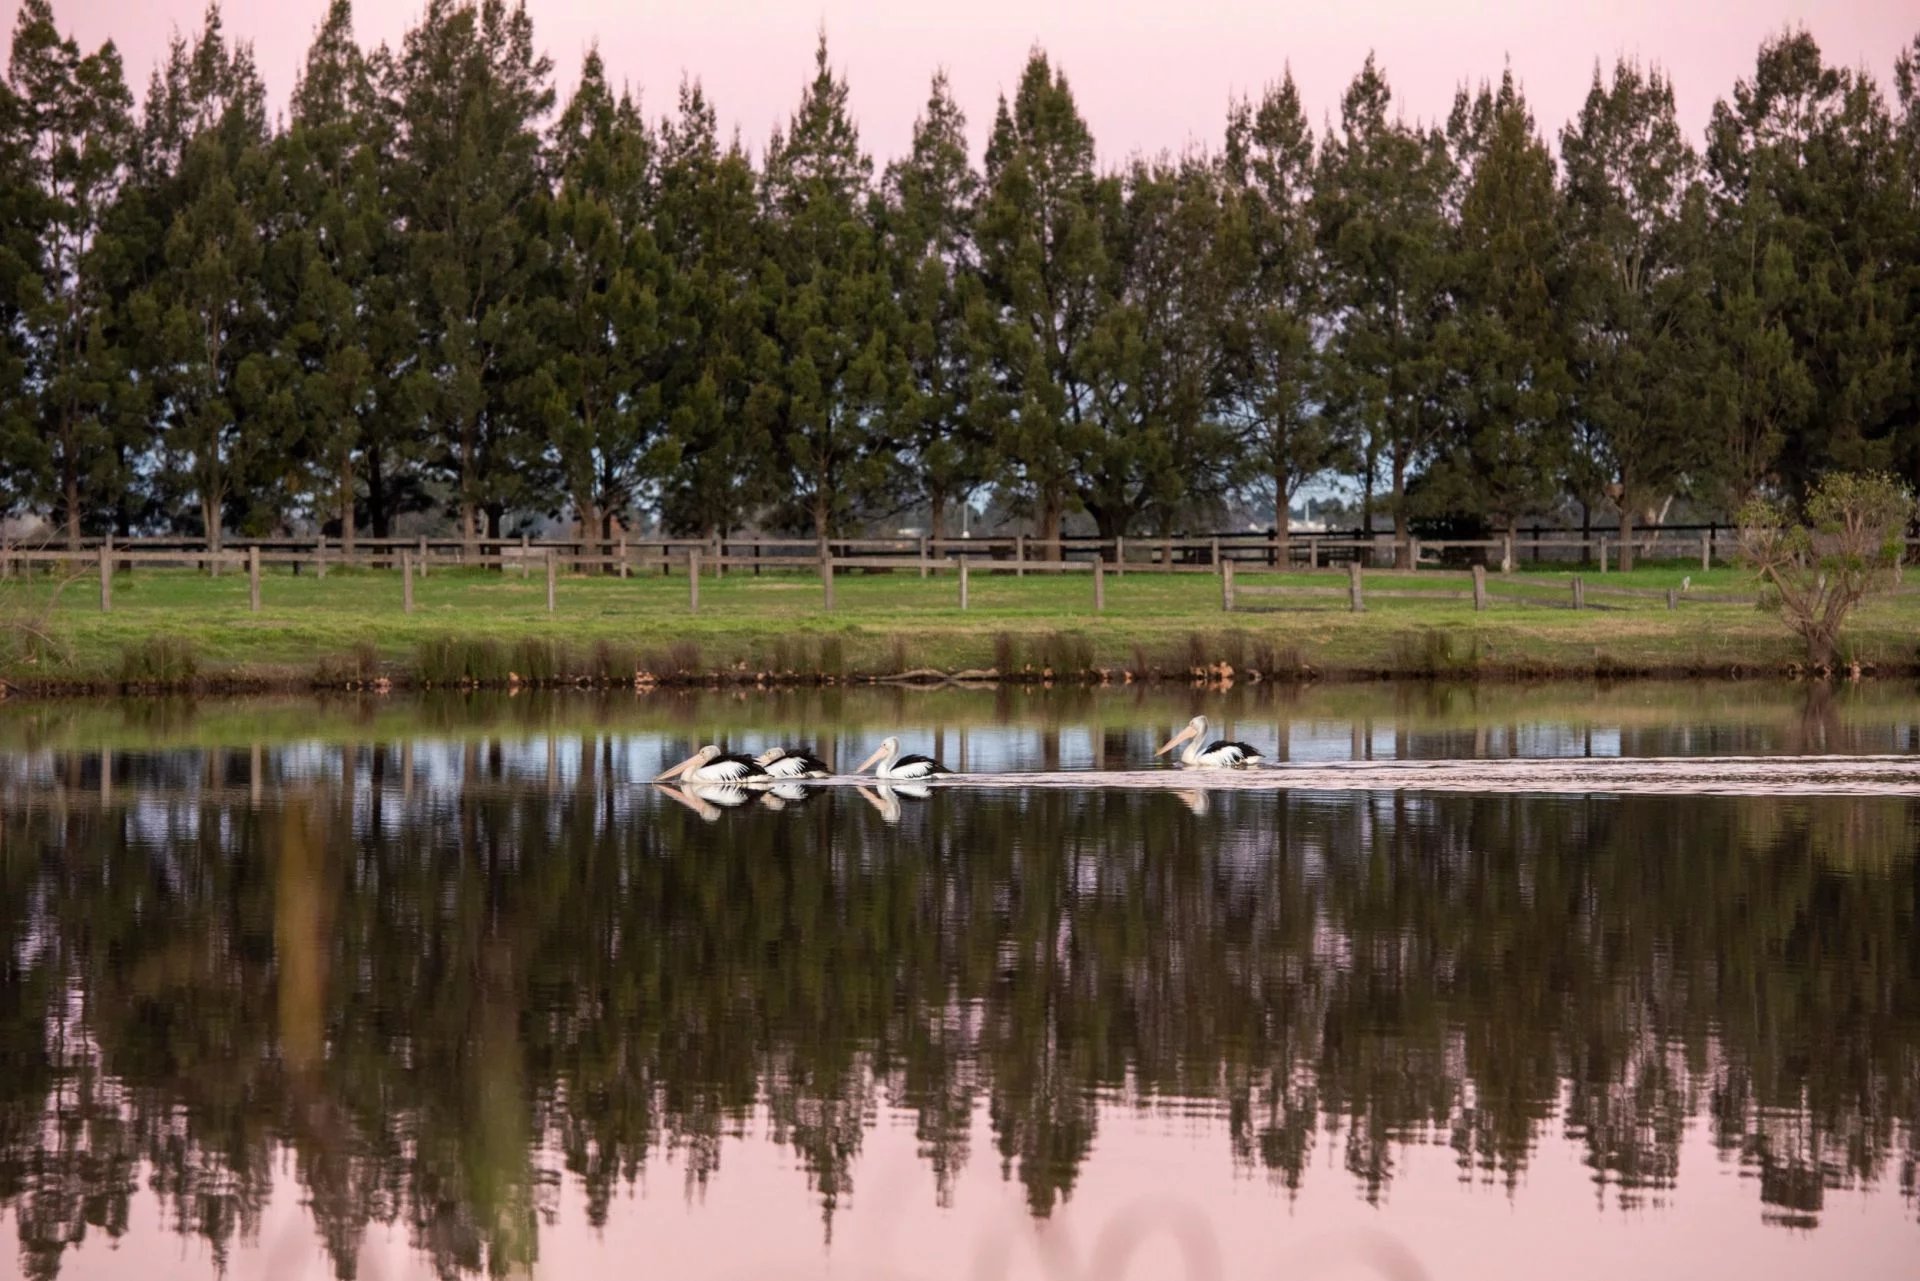 sydney-s premier polo club in an idyllic setting by the hawkesbury river image16